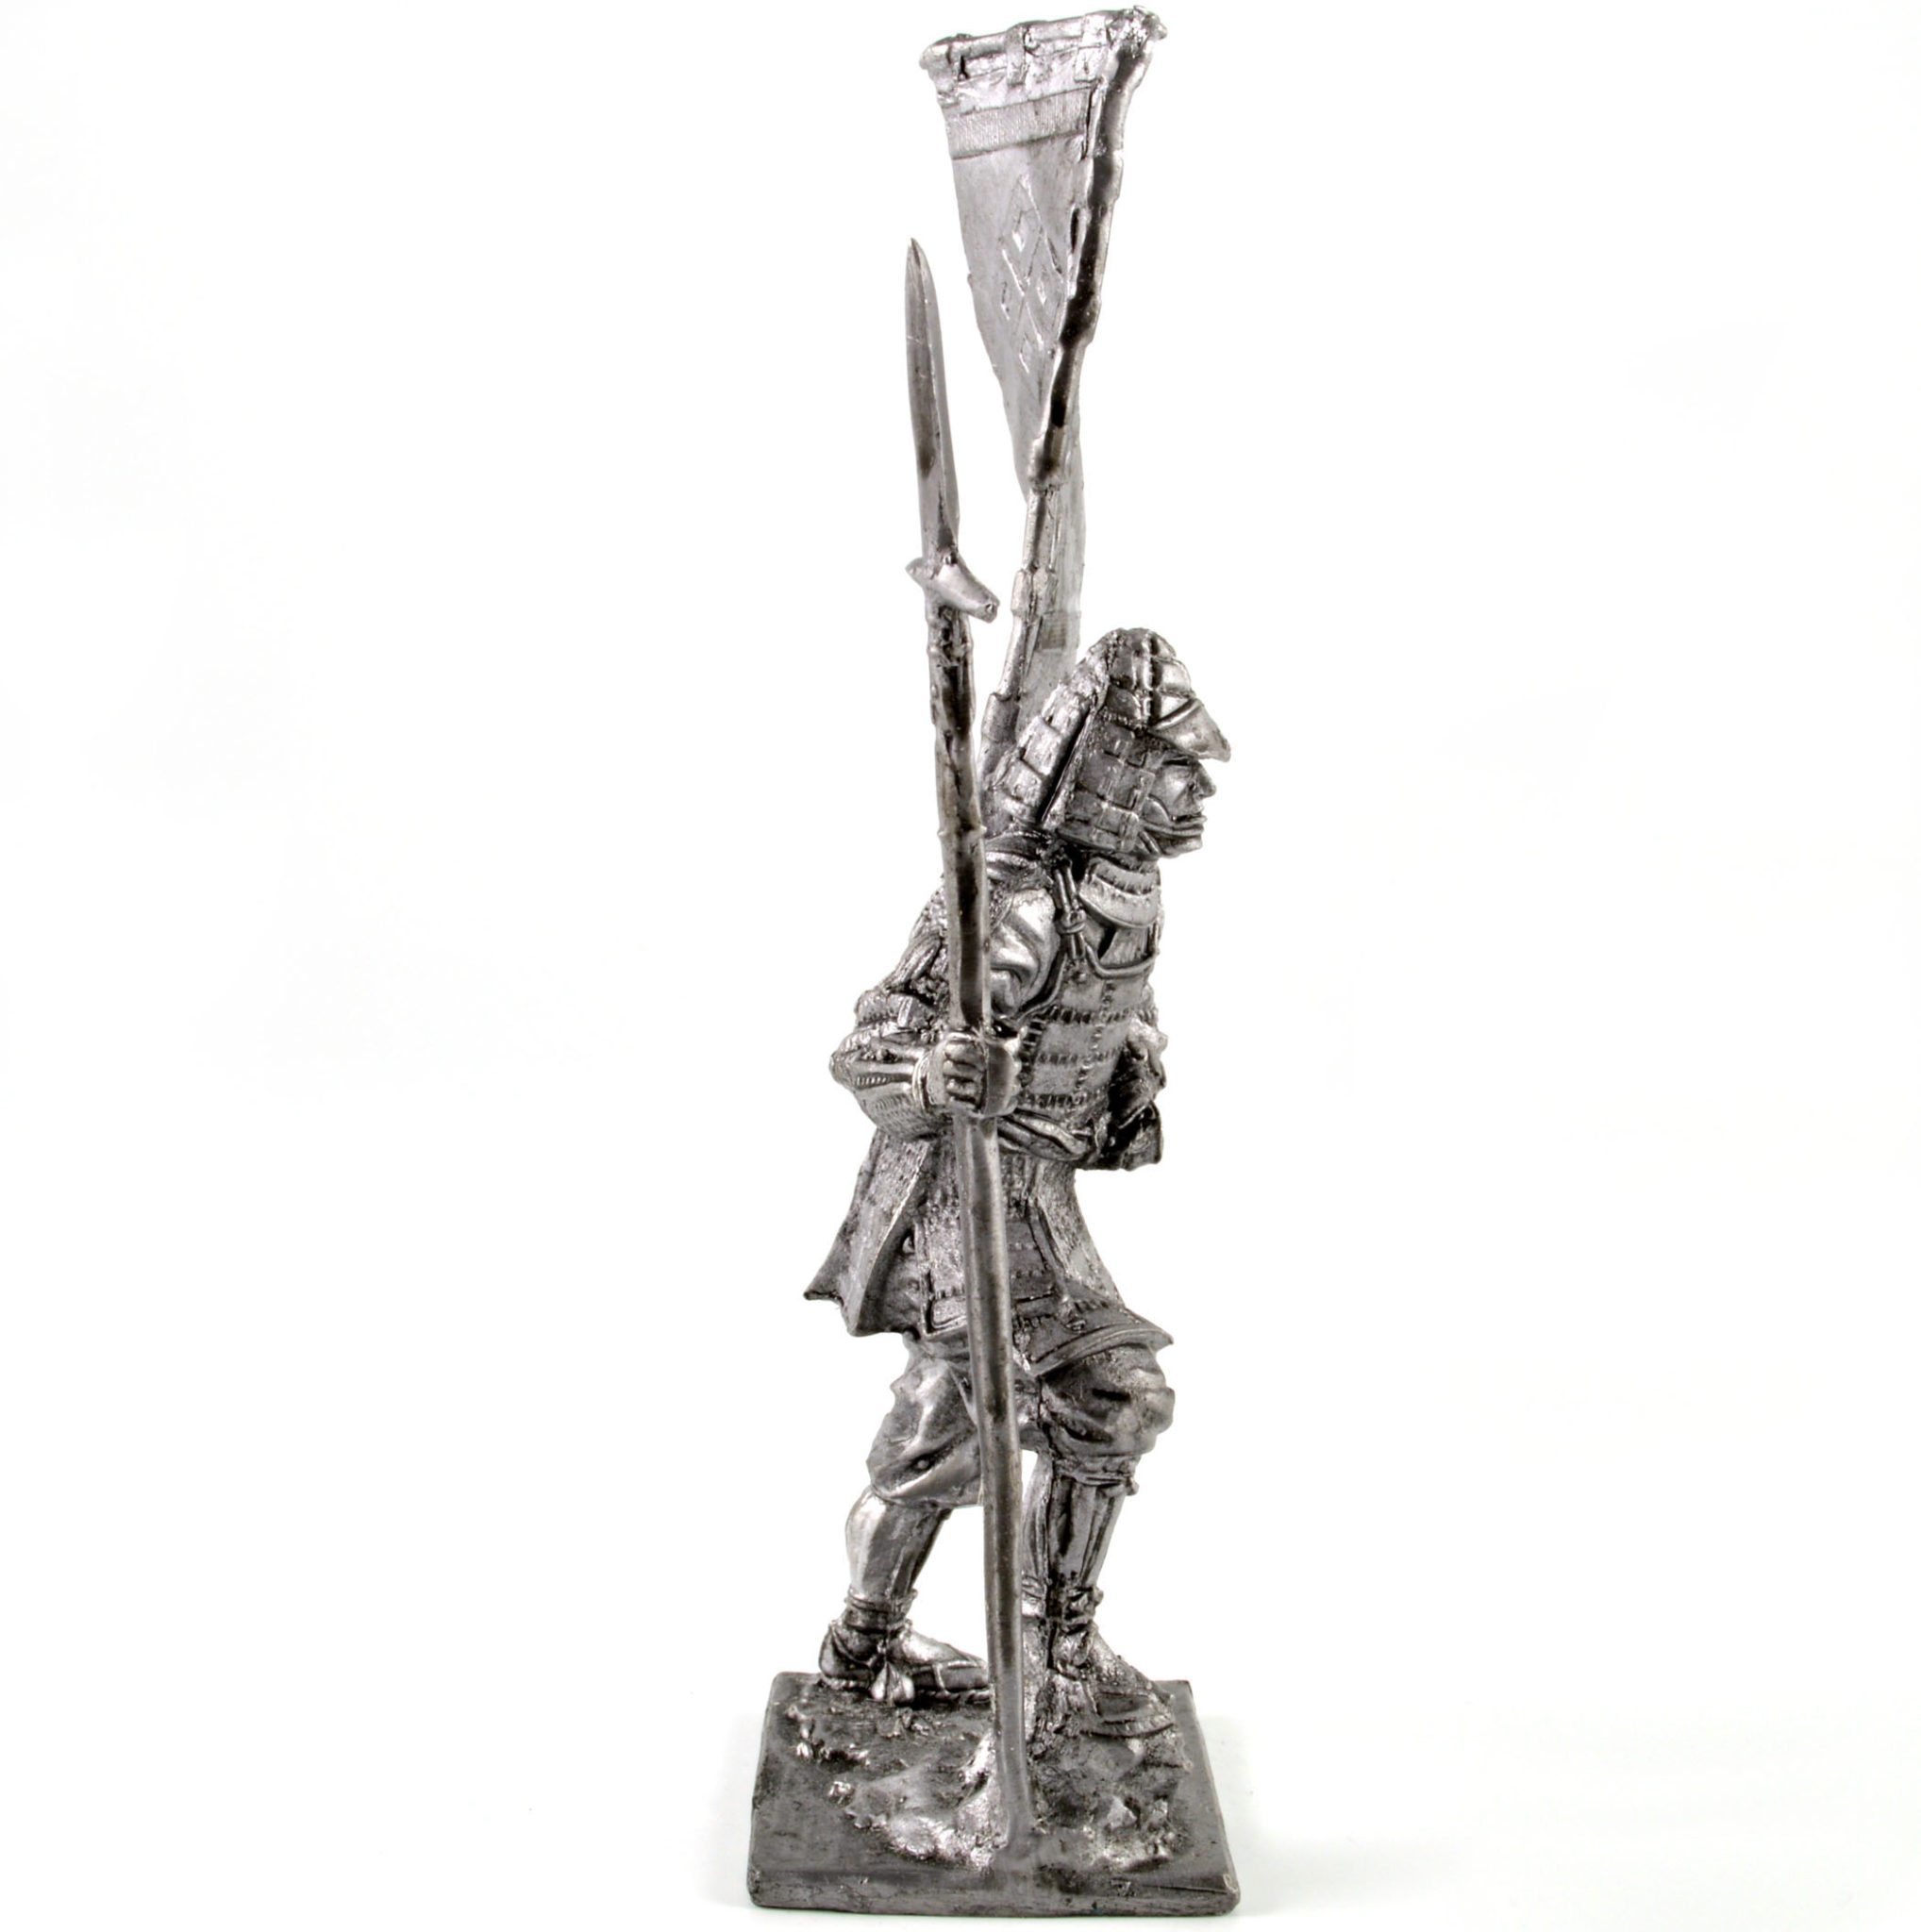 Ashigaru Japan 54mm miniature figurine Tin toy soldiers metal sculpture 